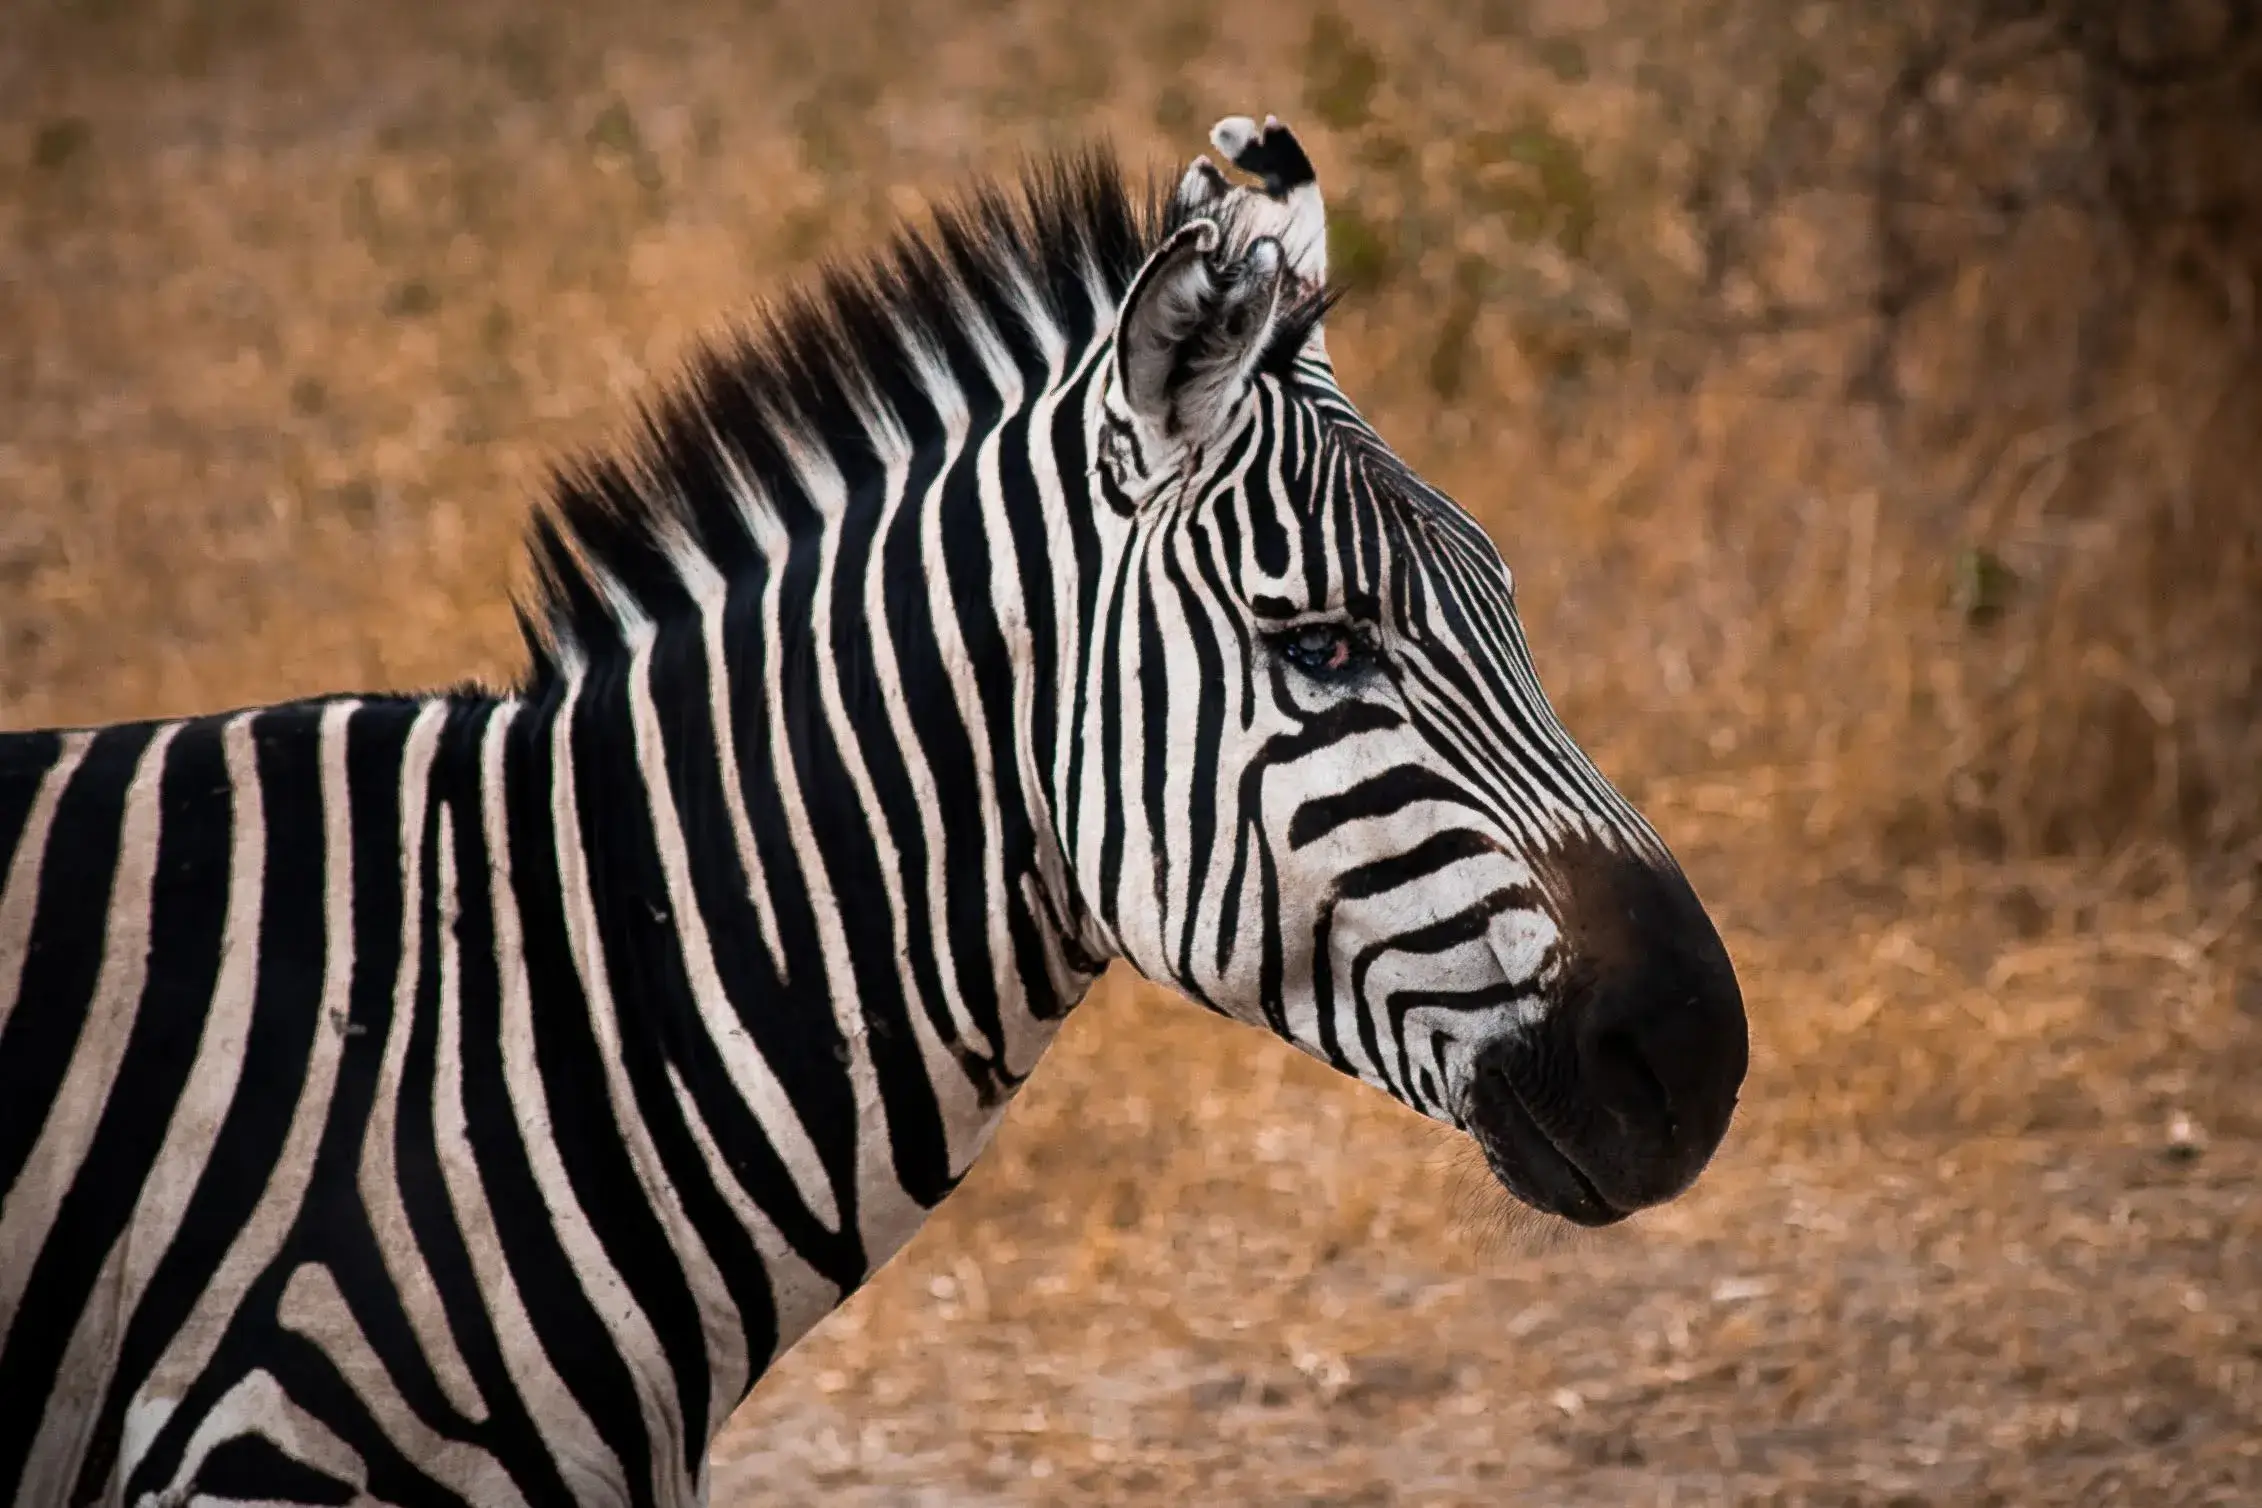 a zebra spotted in Tanzanian safari jungles